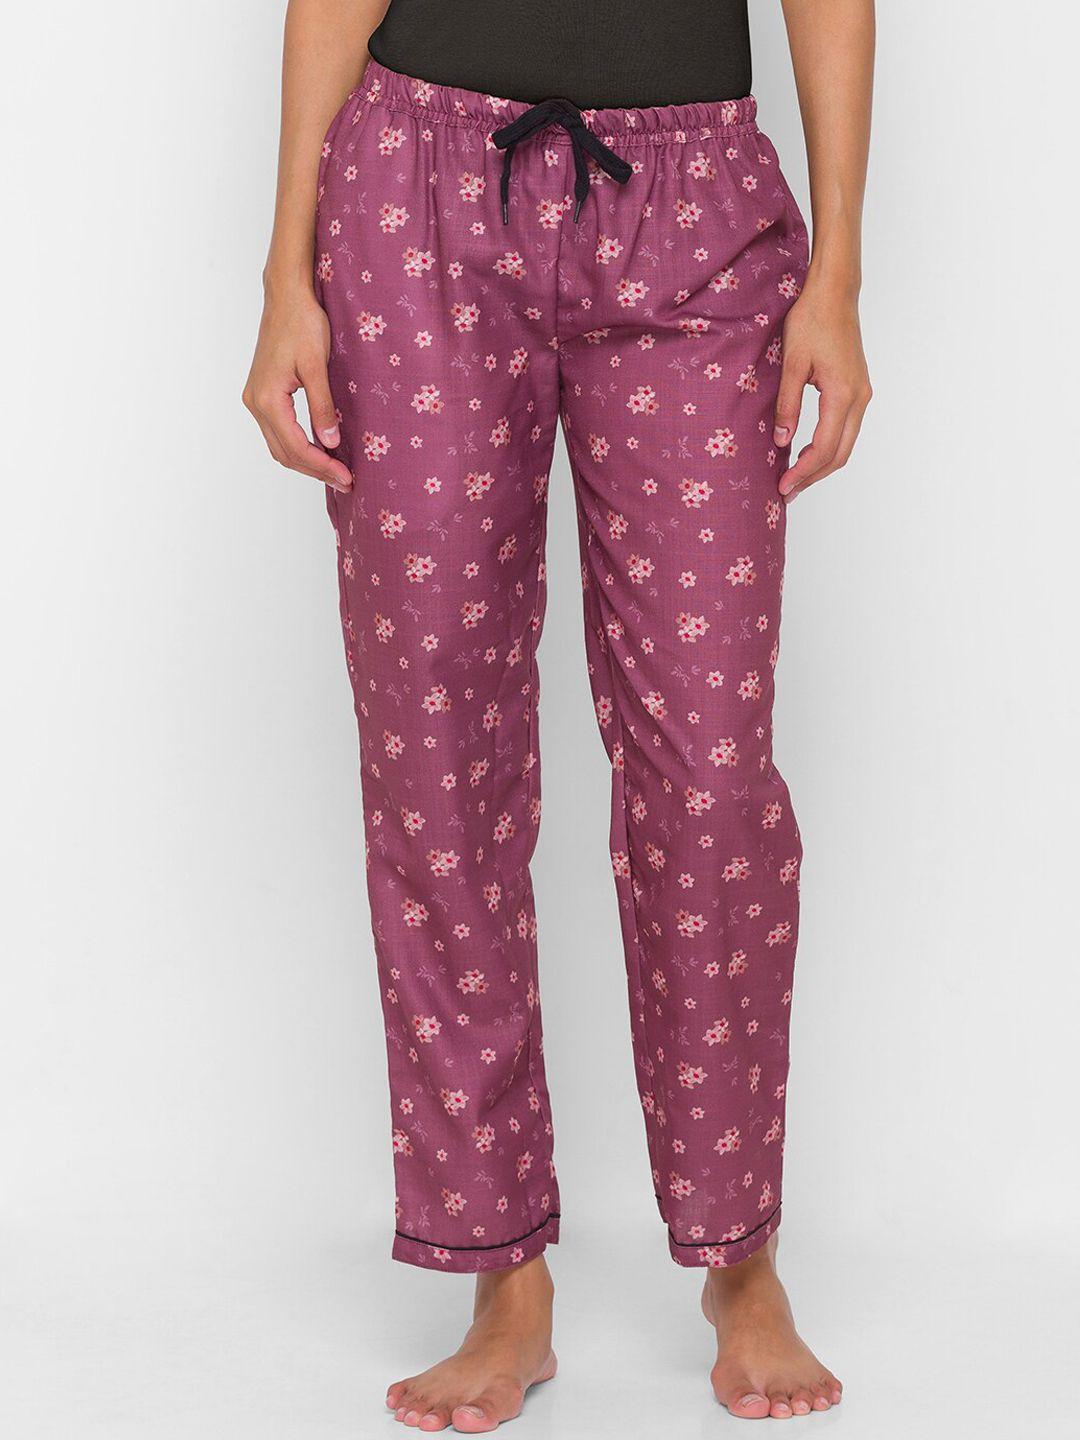 fashionrack women purple printed lounge pants